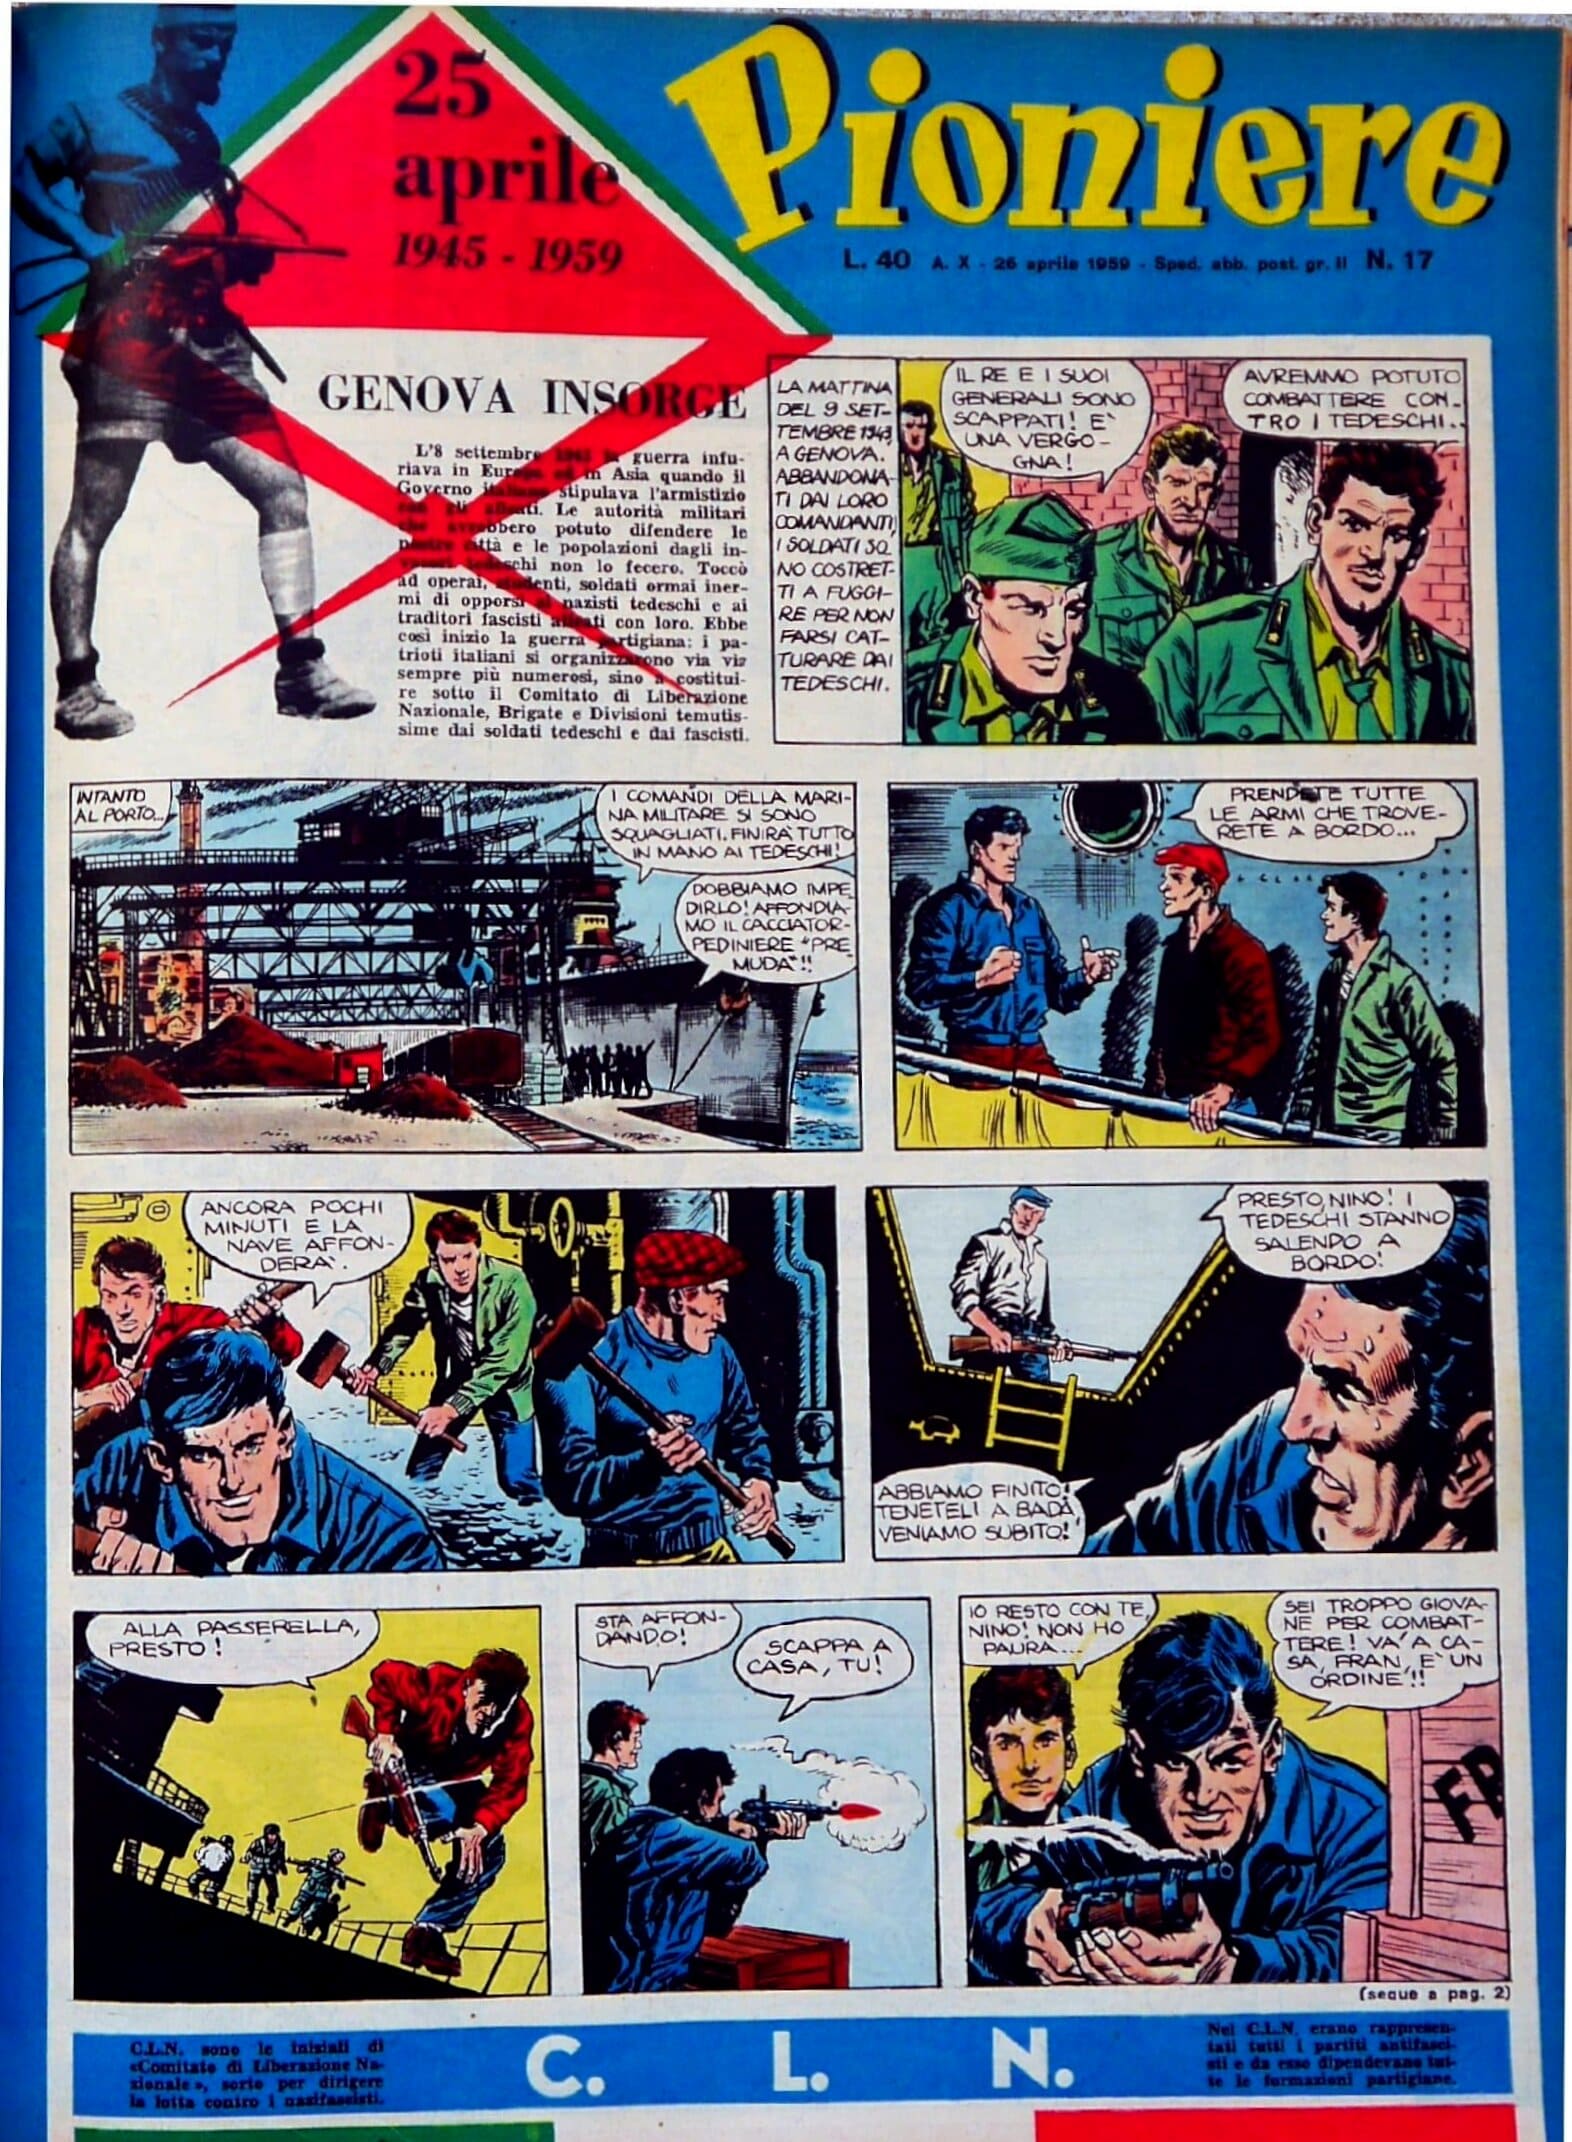 Genova Insorge Pioniere n.17. 26 aprile 1959